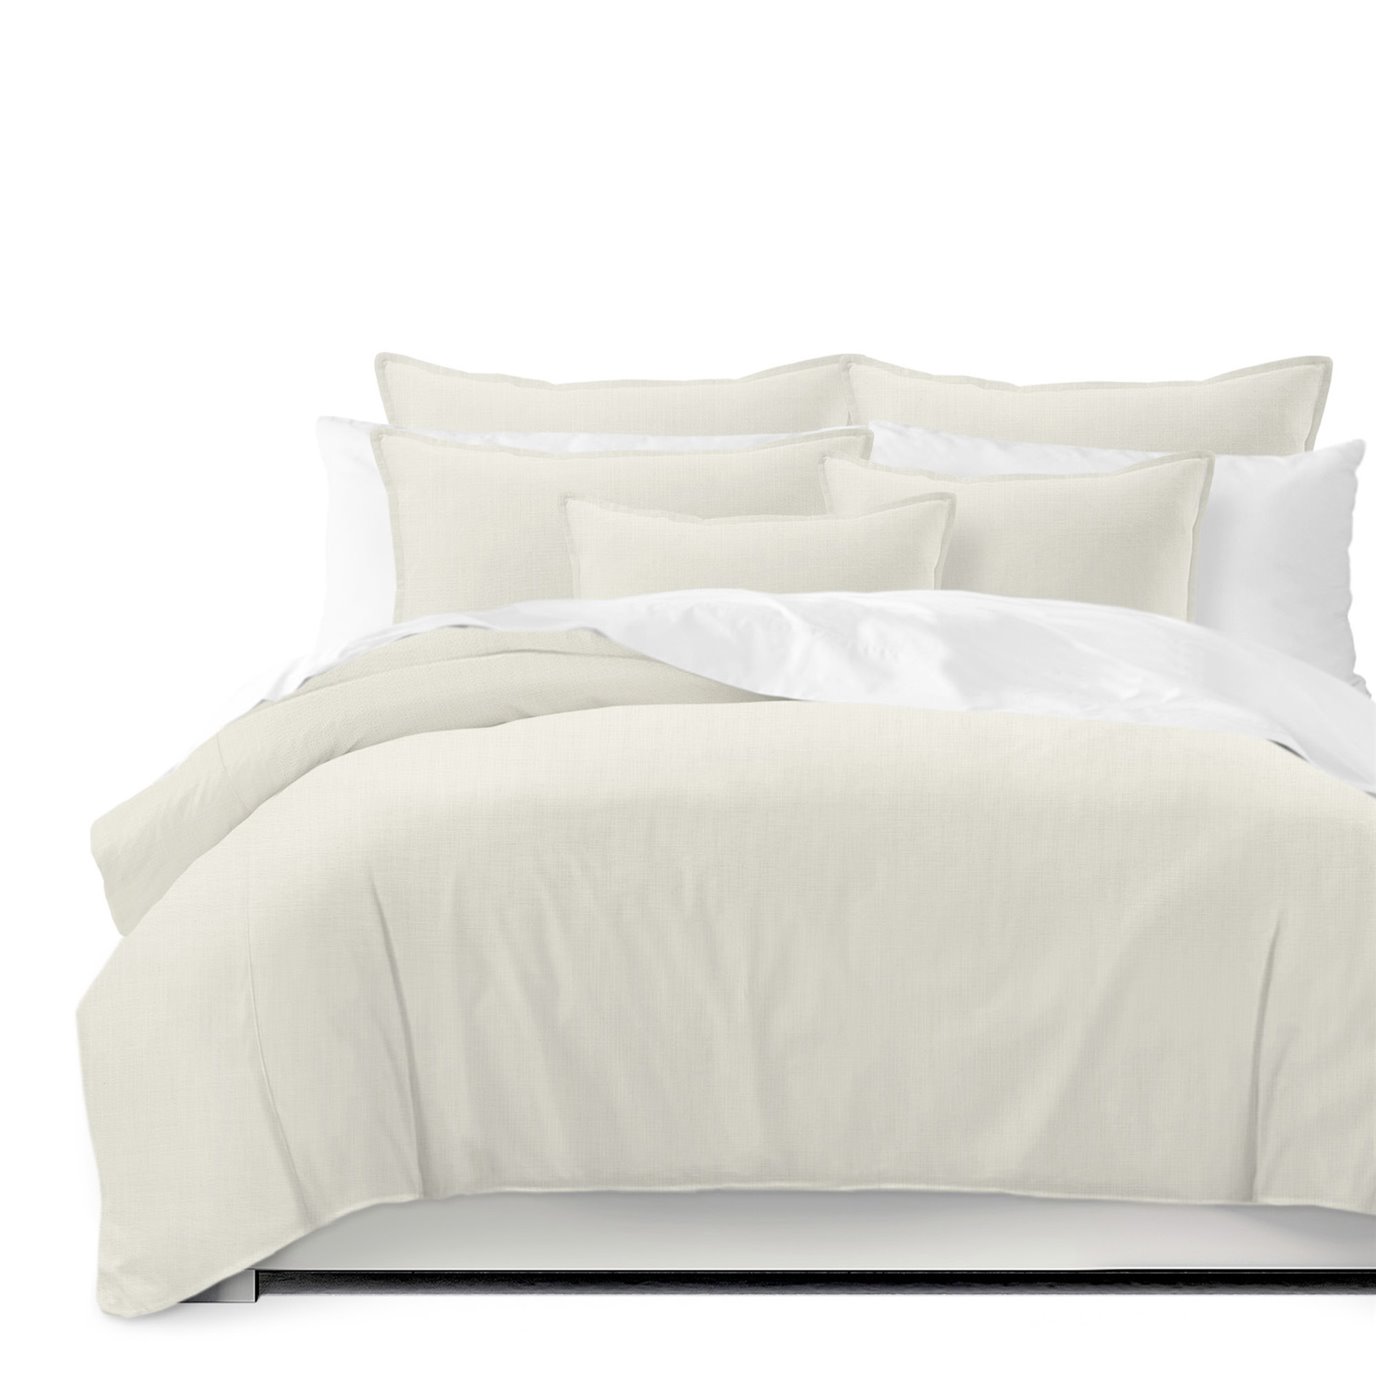 Ancebridge Vanilla Comforter and Pillow Sham(s) Set - Size King / California King